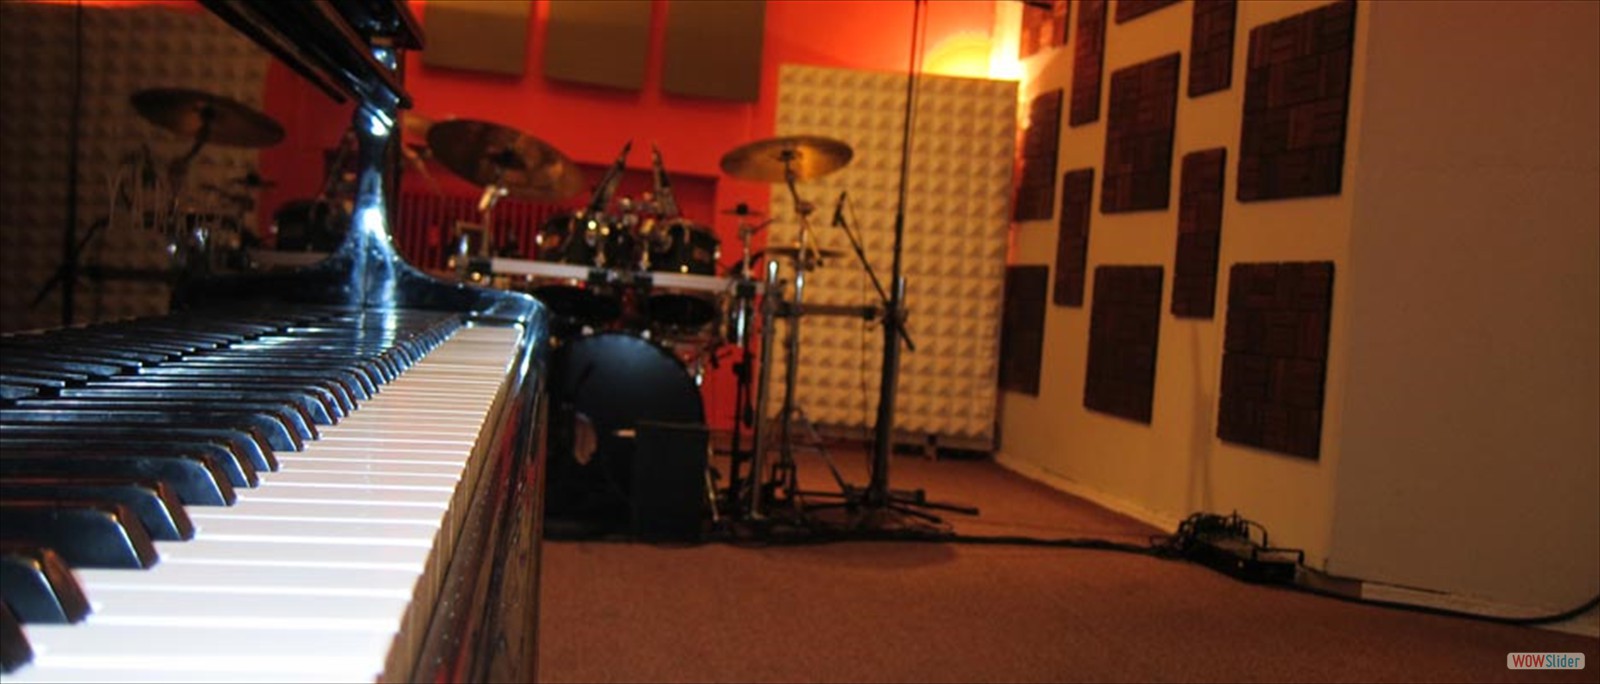 recording room 1